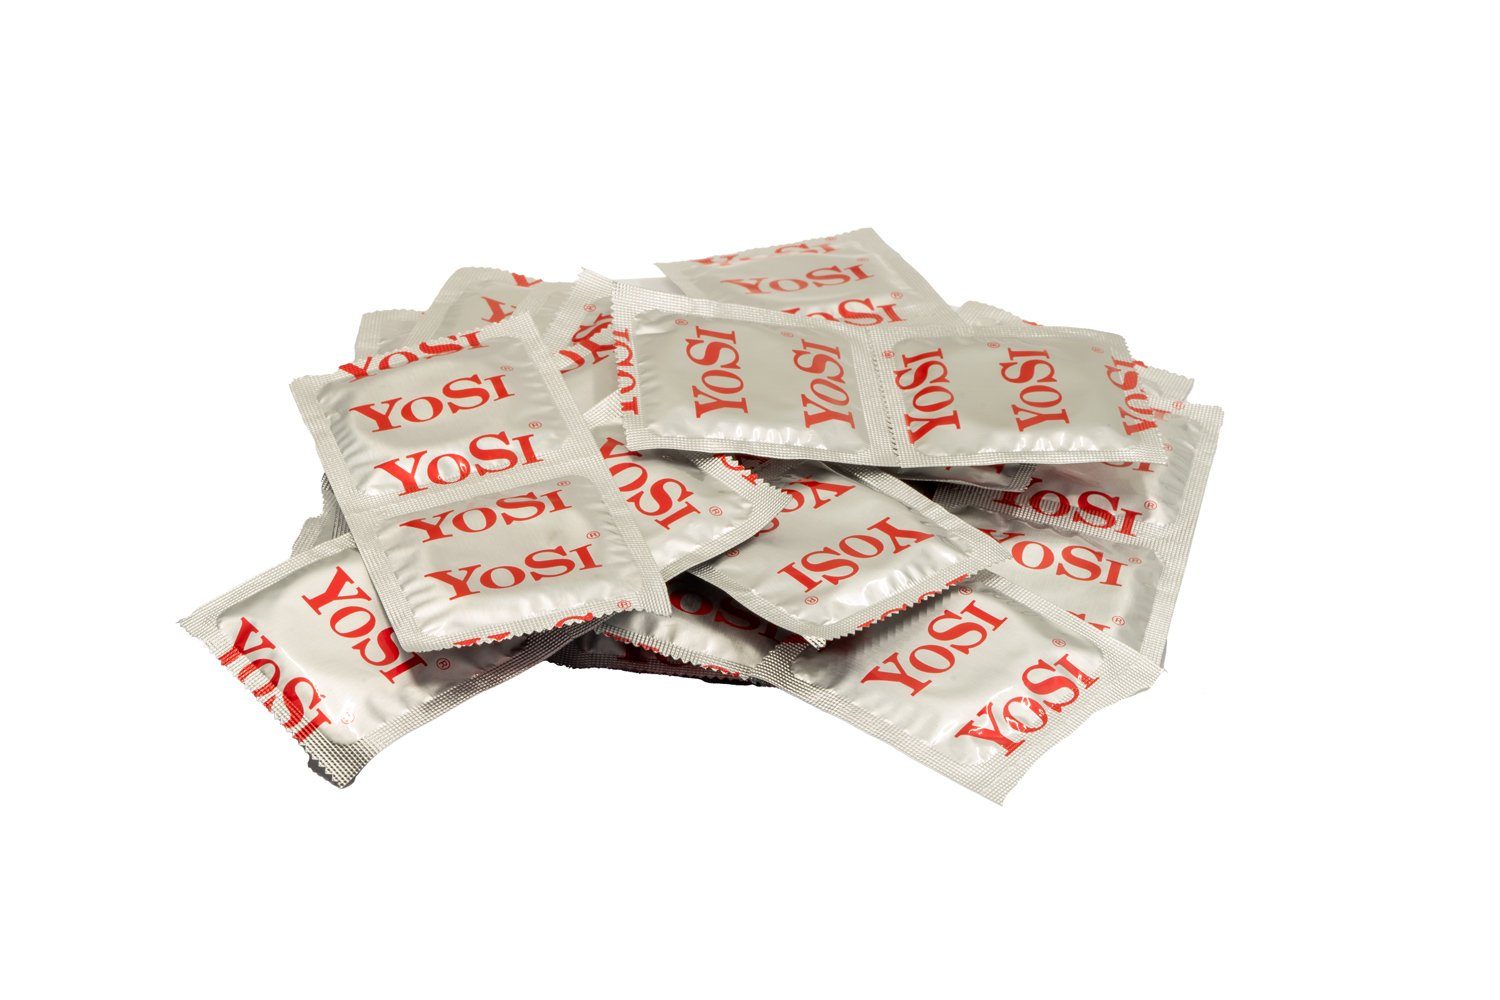 YOSI Kondome 25877R, 10er Set XXL, Markenkondome extra groß - Inhalt jeweils 50 Stück